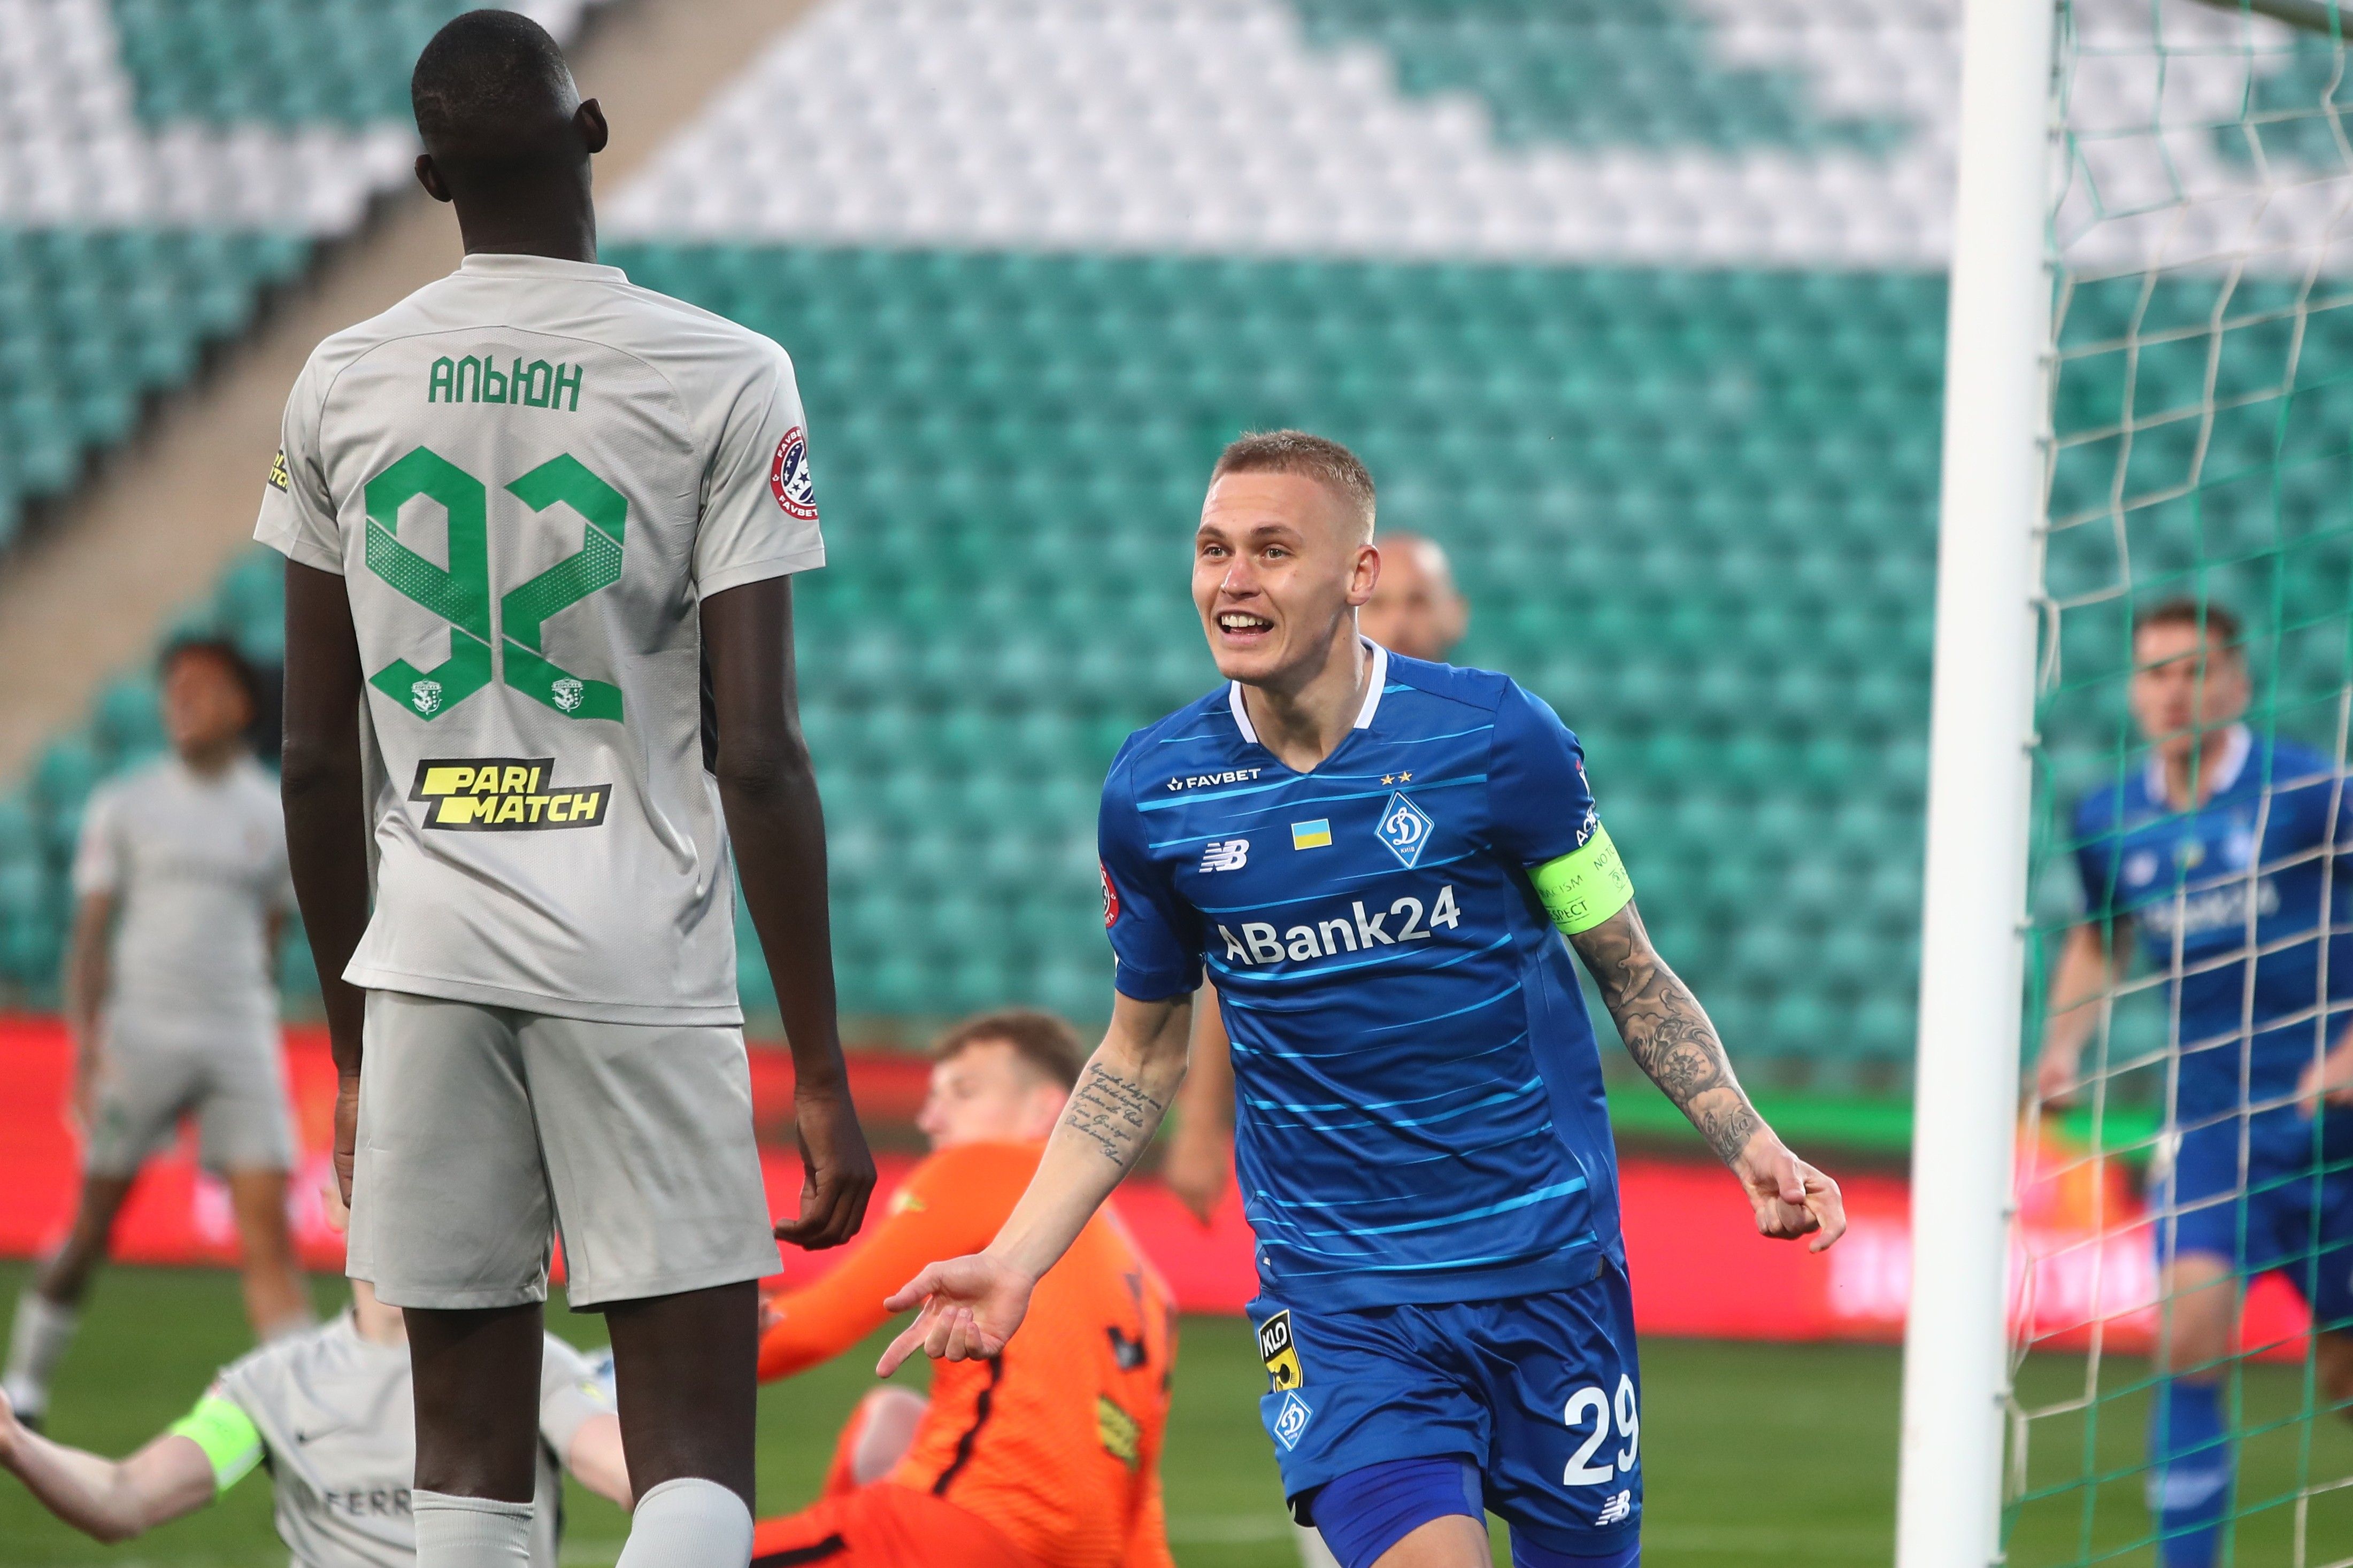 Dynamo – Vorskla: goalscorers